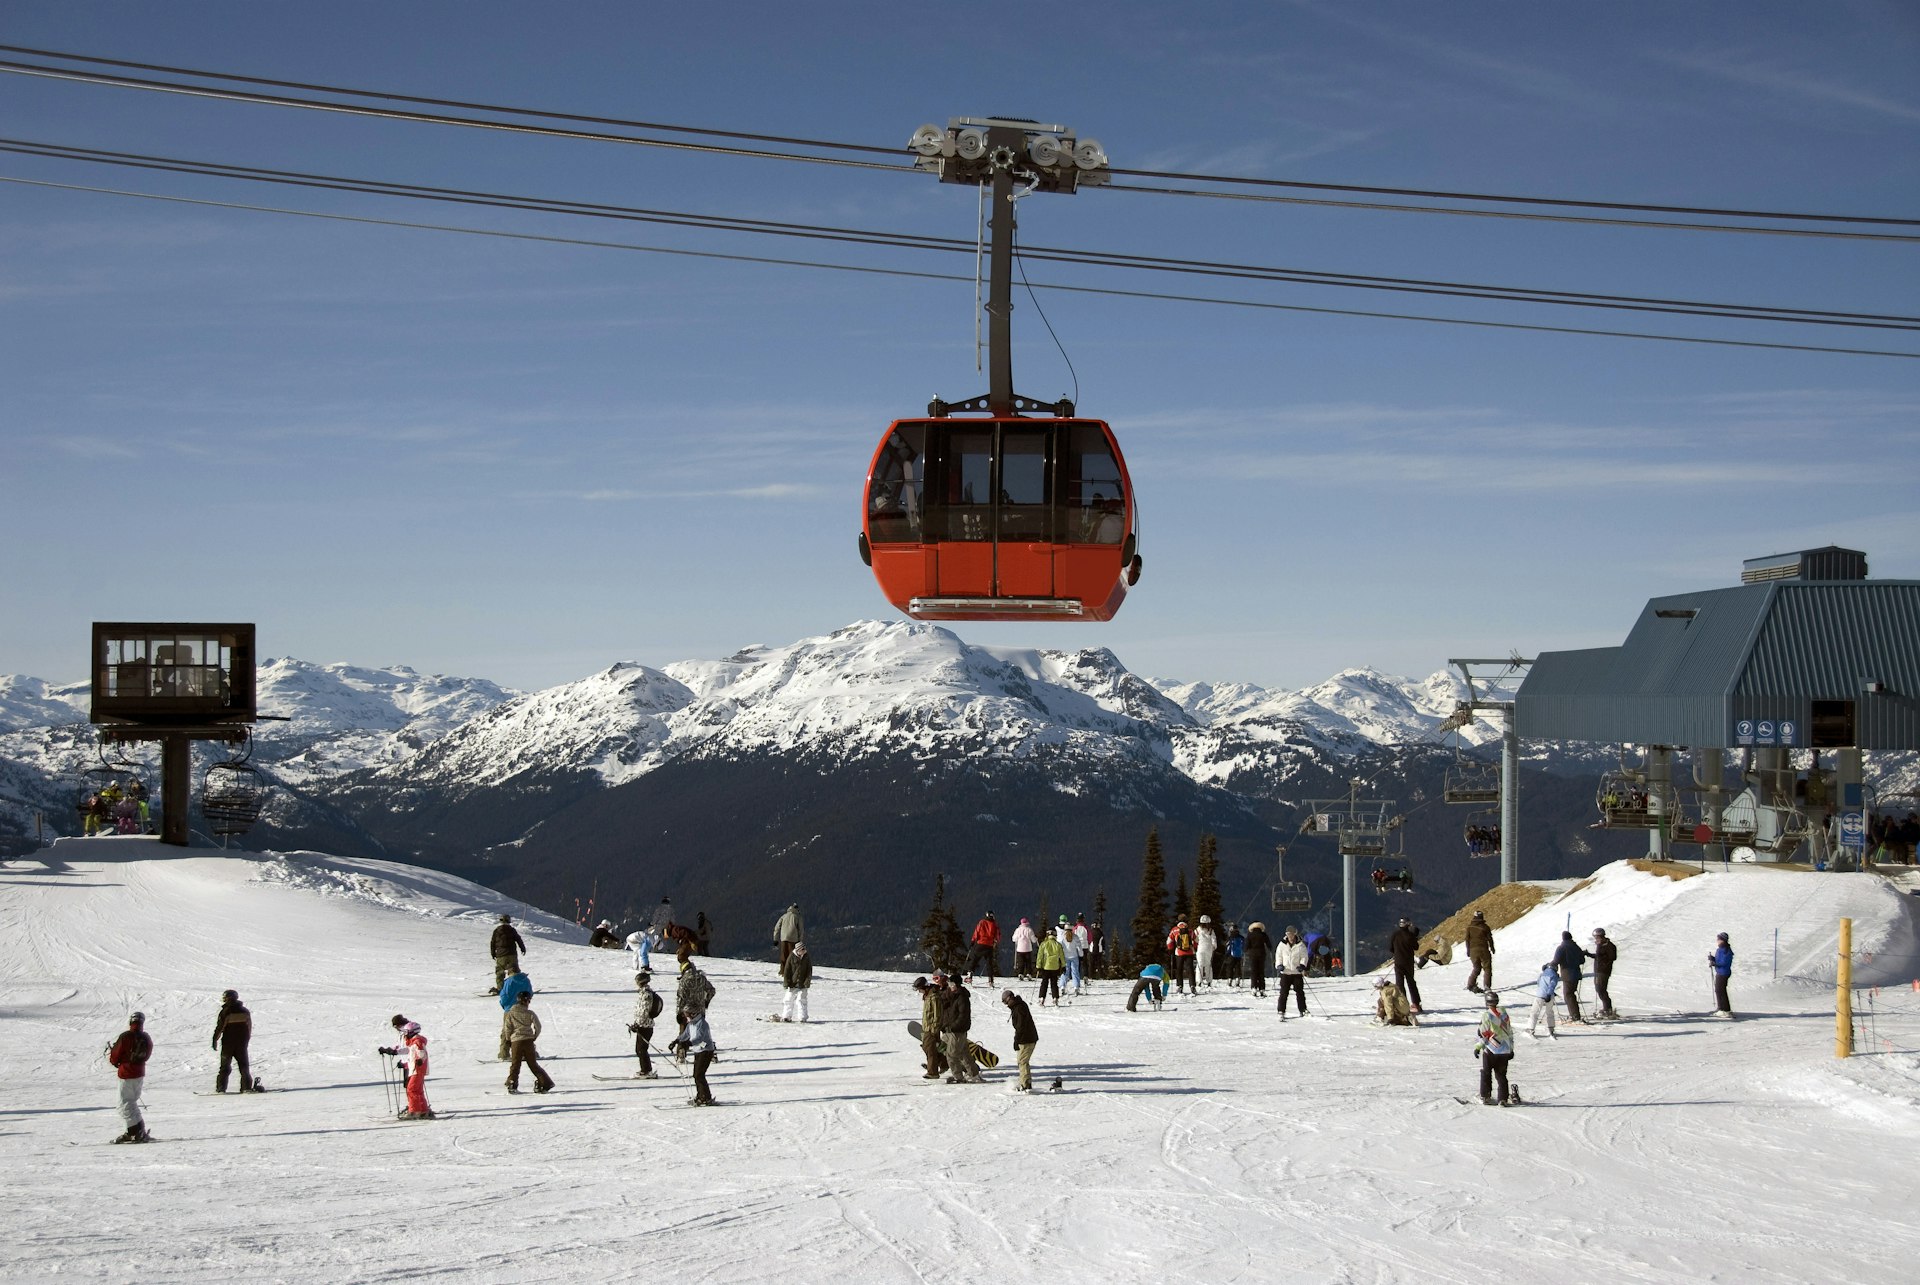 The Peak 2 Peak gondola passes over skiers on the slopes in Whistler, British Columbia, Canada